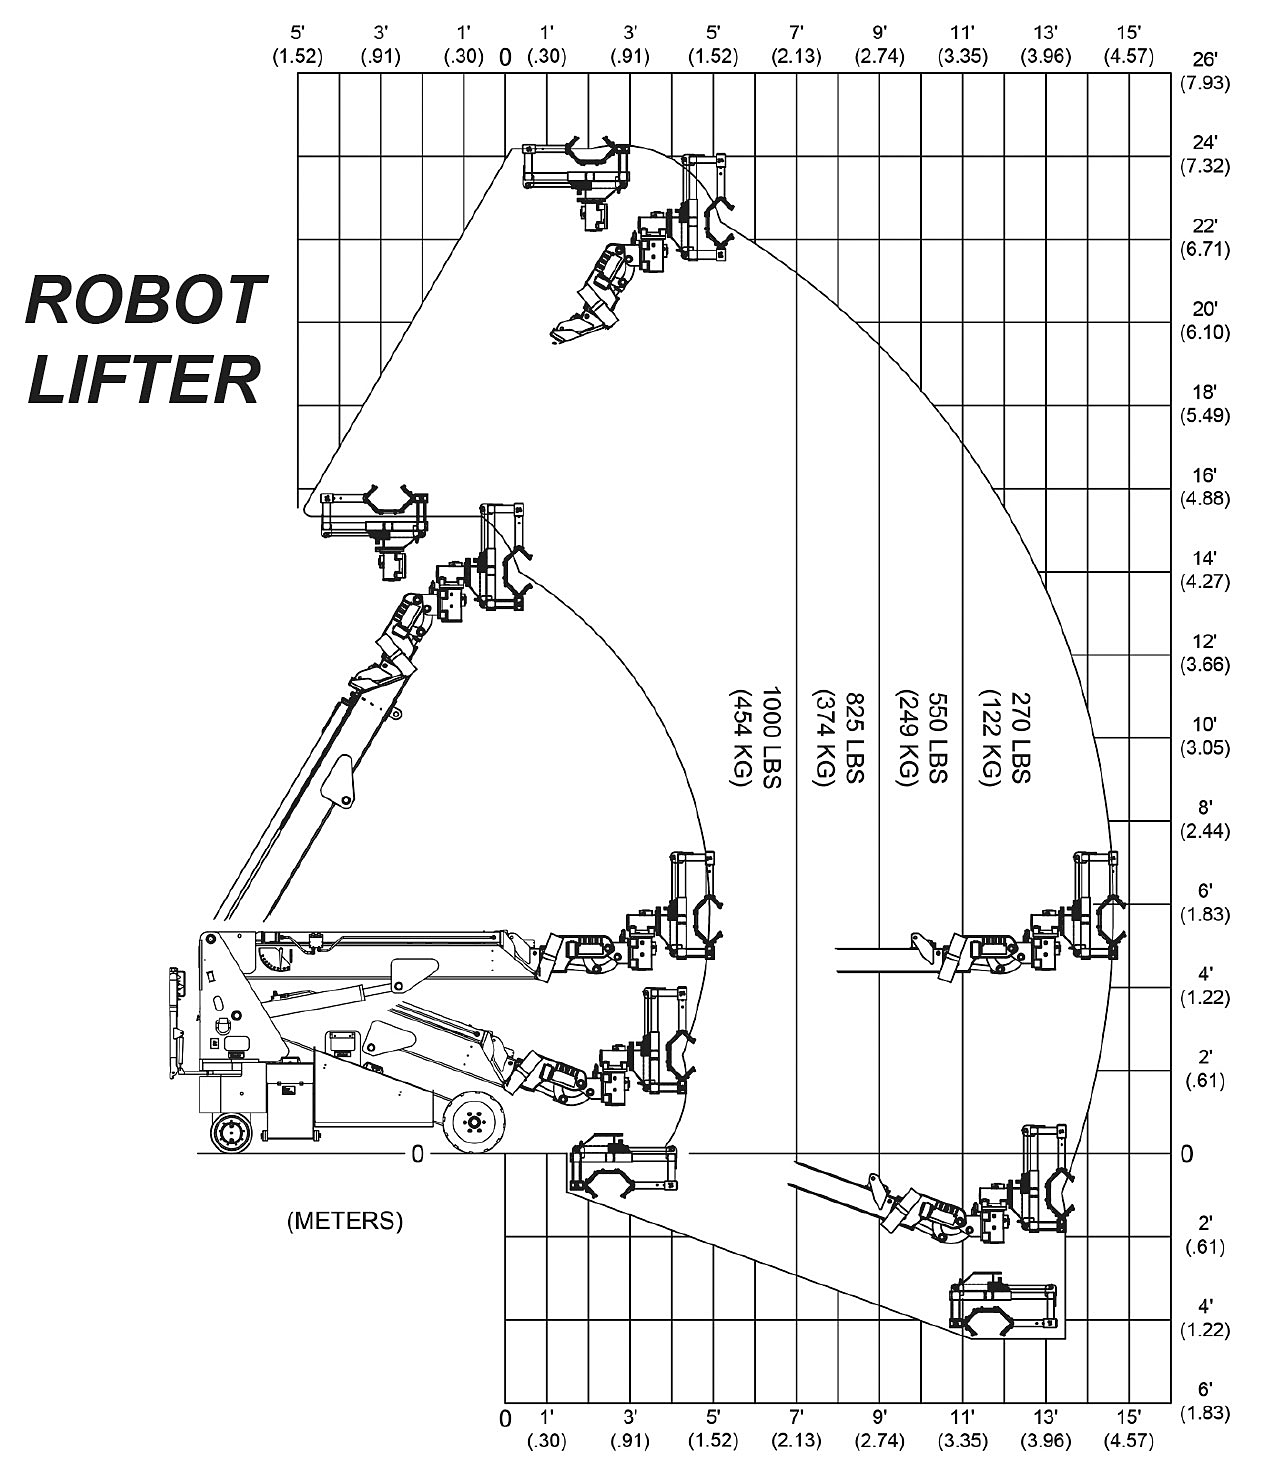 The Junior Robot Lifter Load Capacity